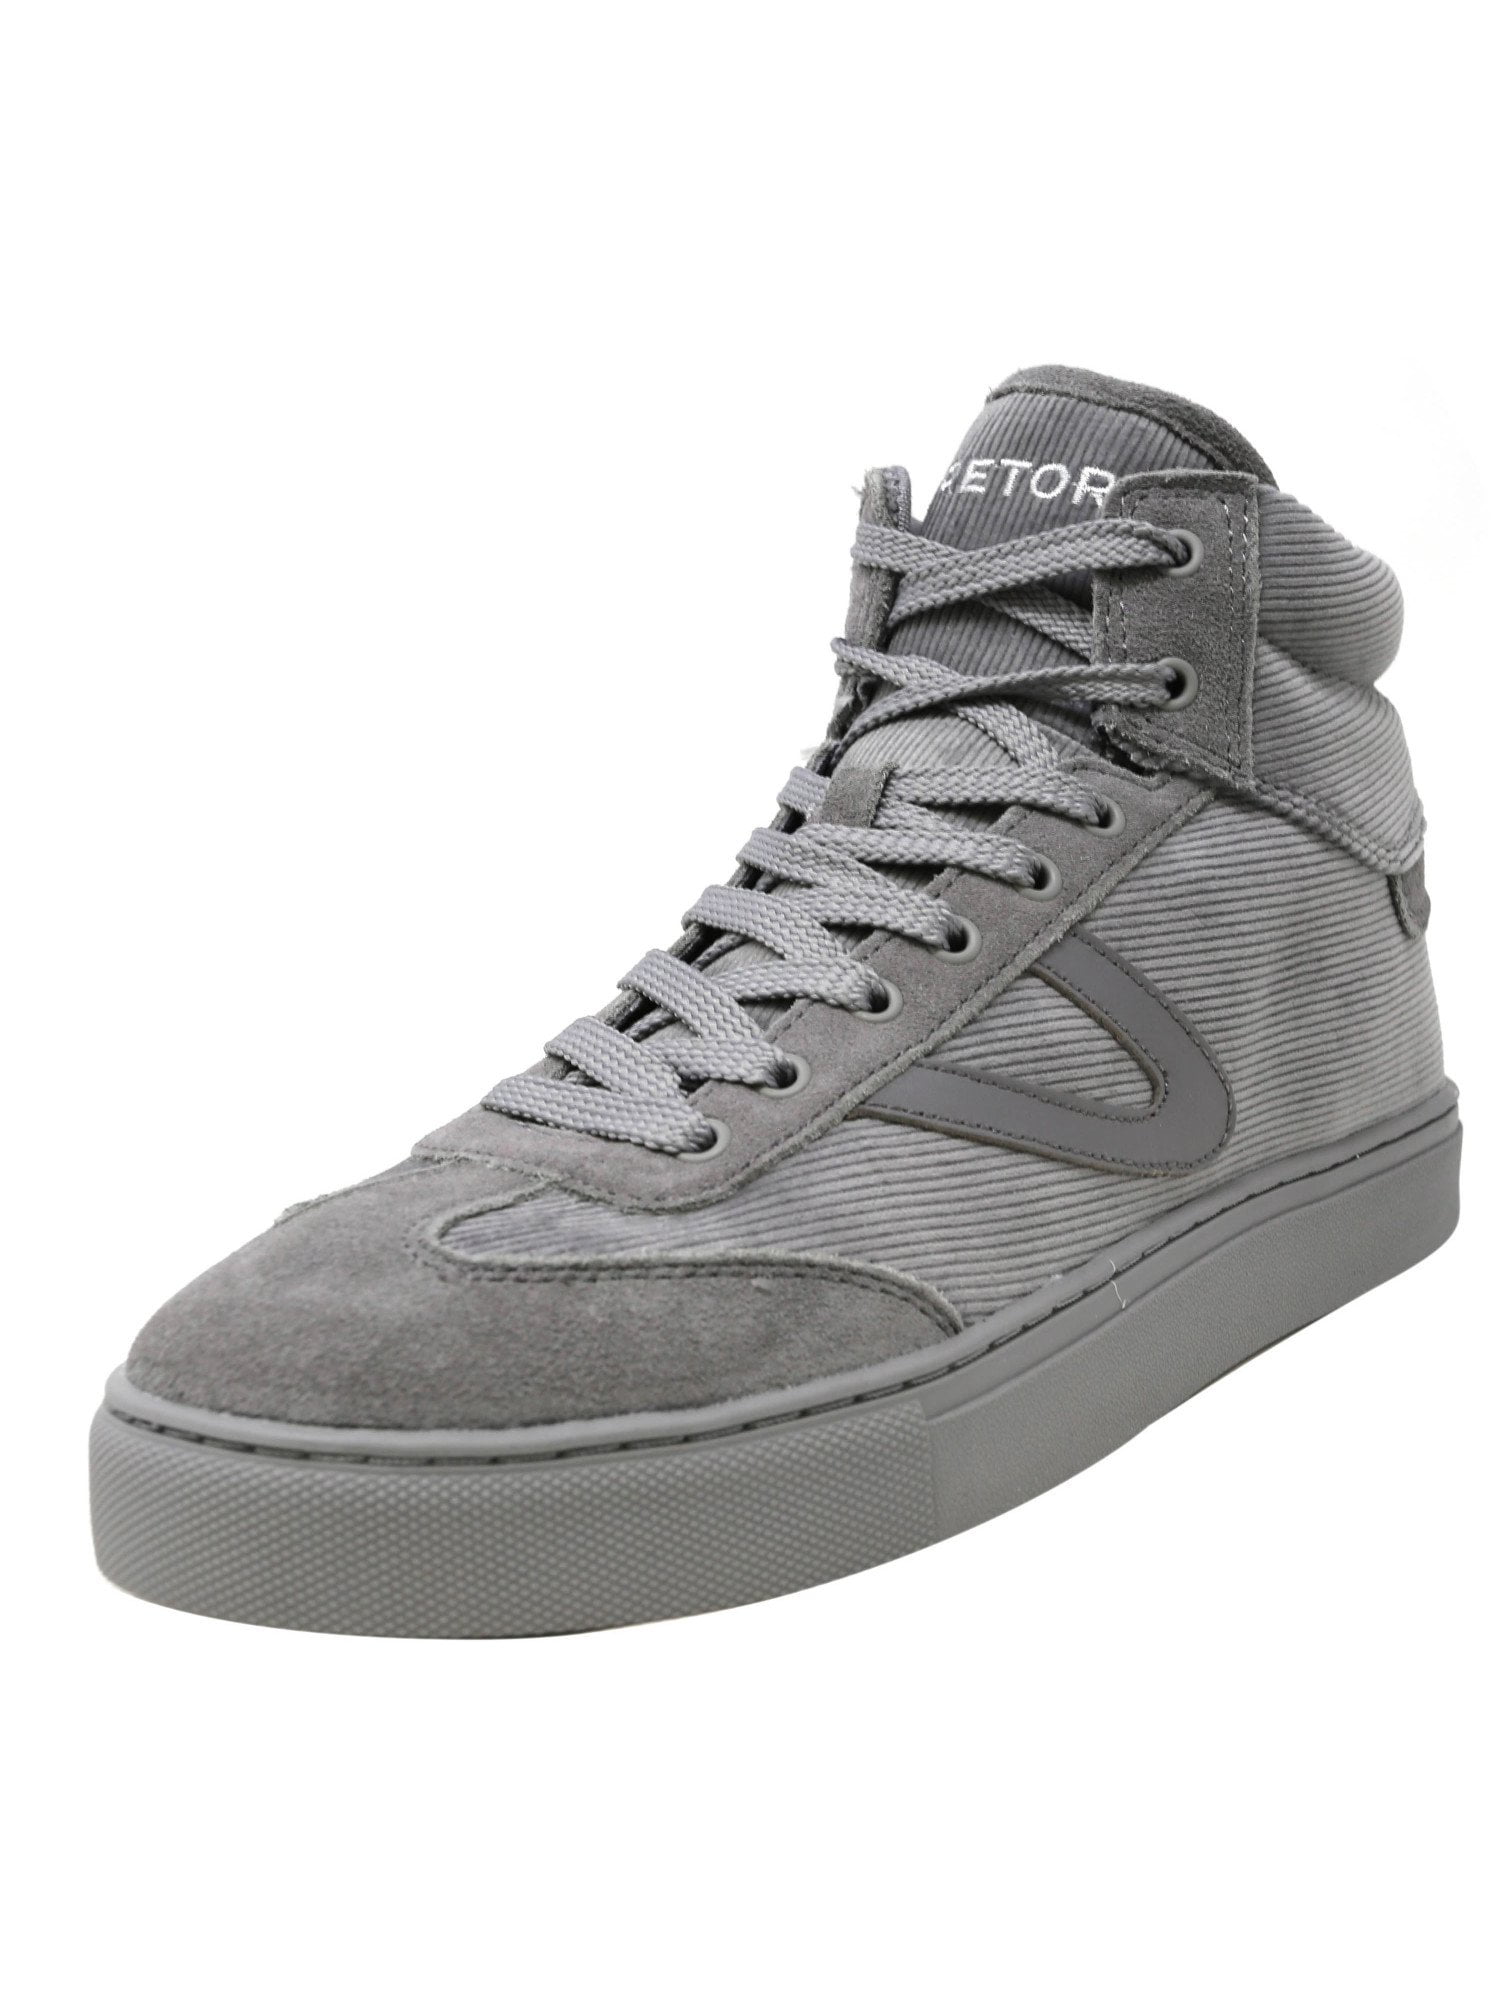 mens grey fashion sneakers